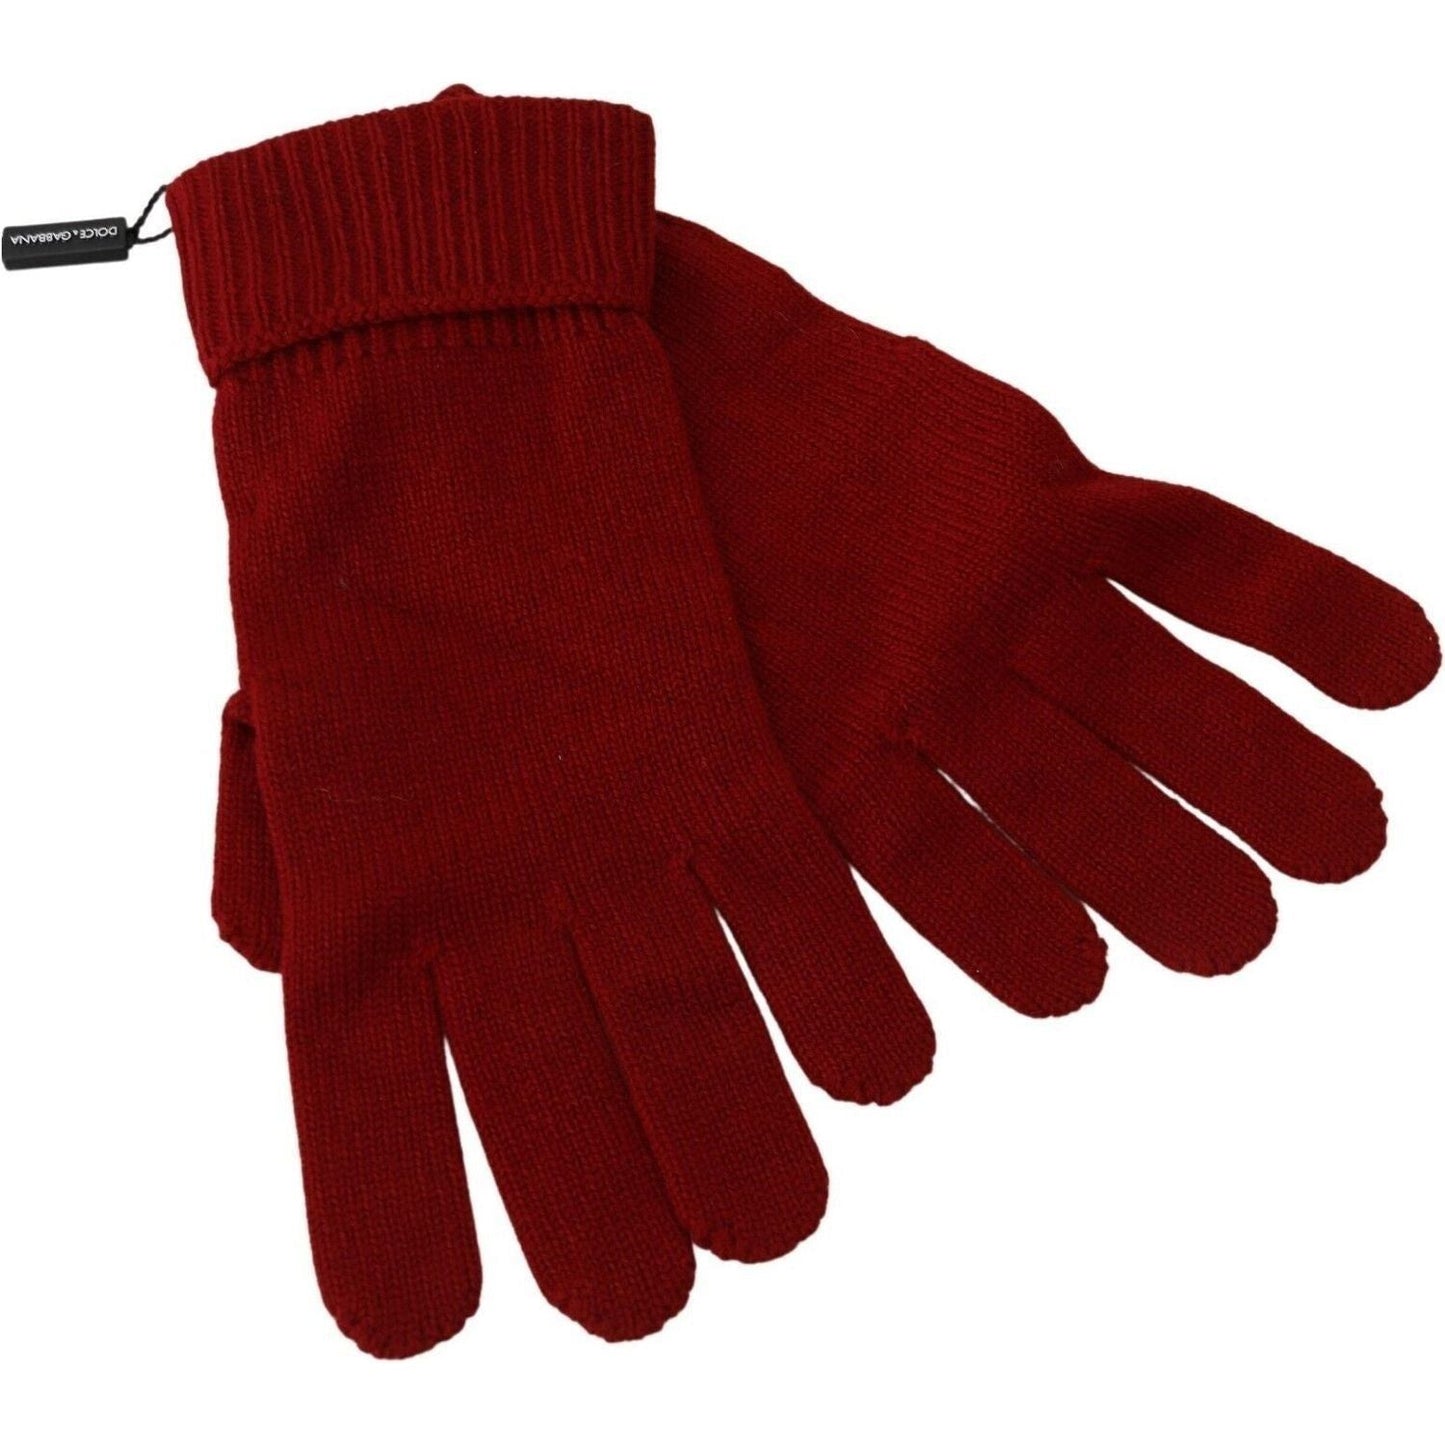 Dolce & Gabbana Elegant Red Cashmere Winter Gloves red-100-cashmere-knit-hands-mitten-mens-gloves s-l1600-45-2-2f7907c6-1fe.jpg